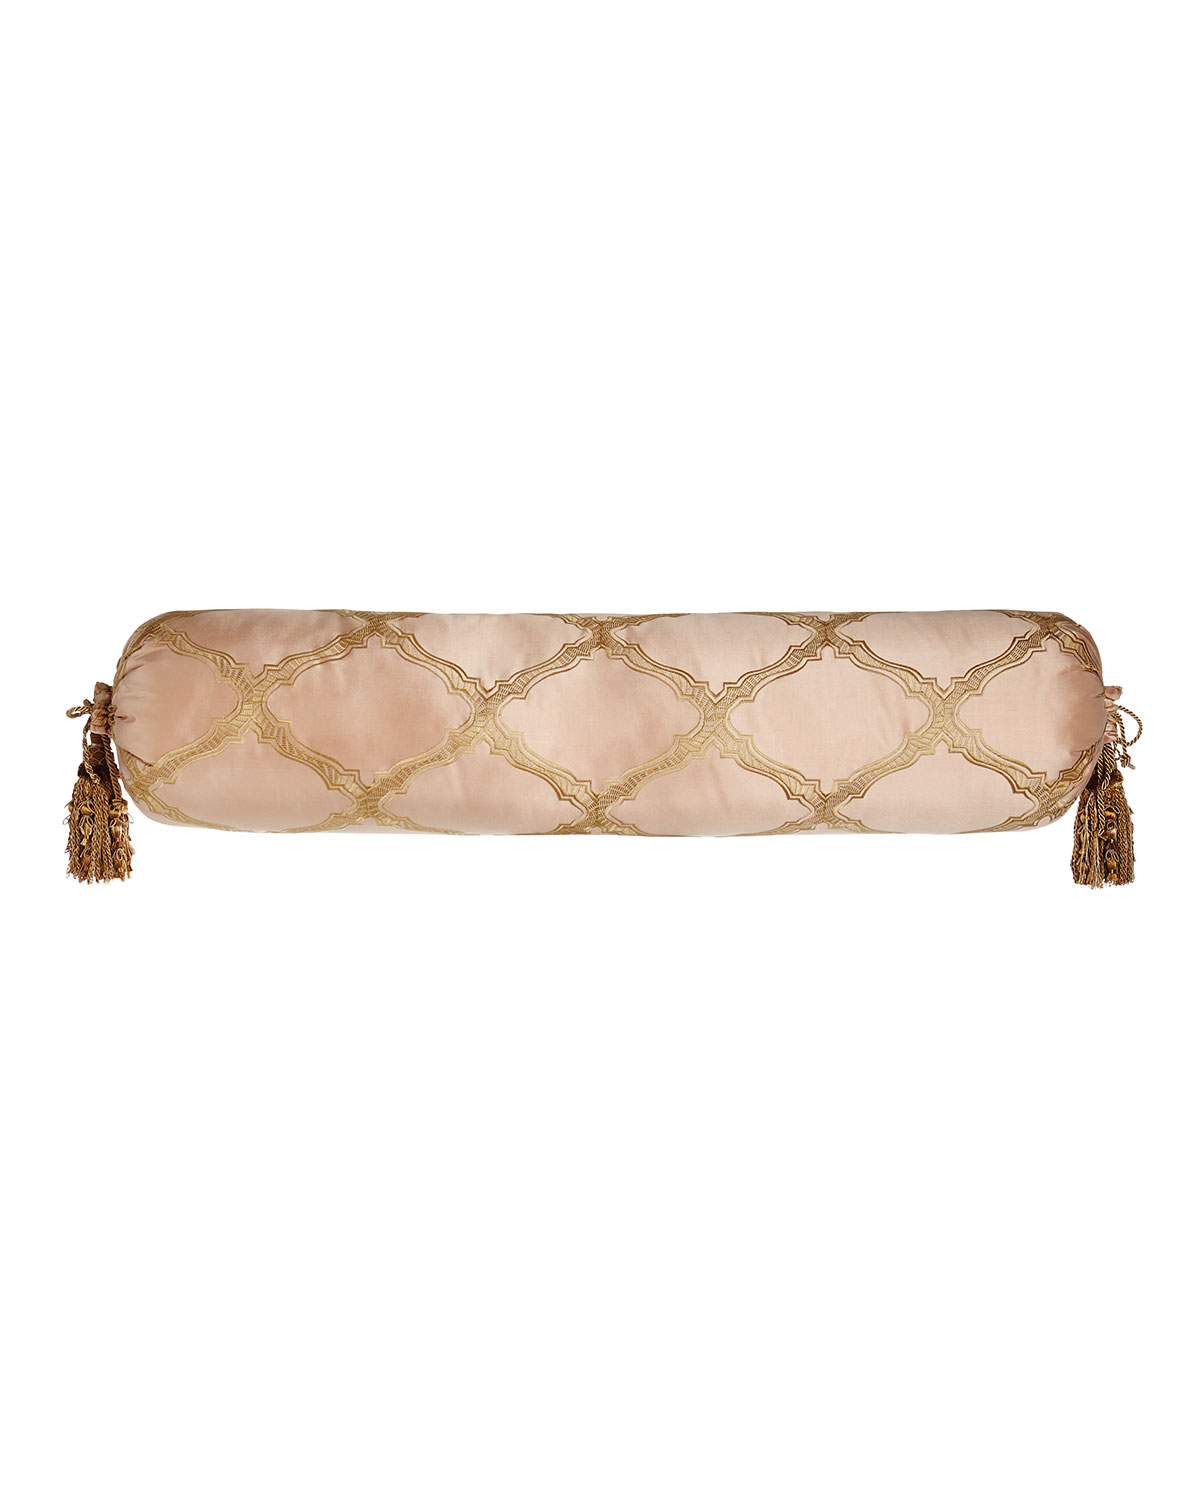 Extra-Long Versailles Bolster Pillow with Tassels, 9" x 36"